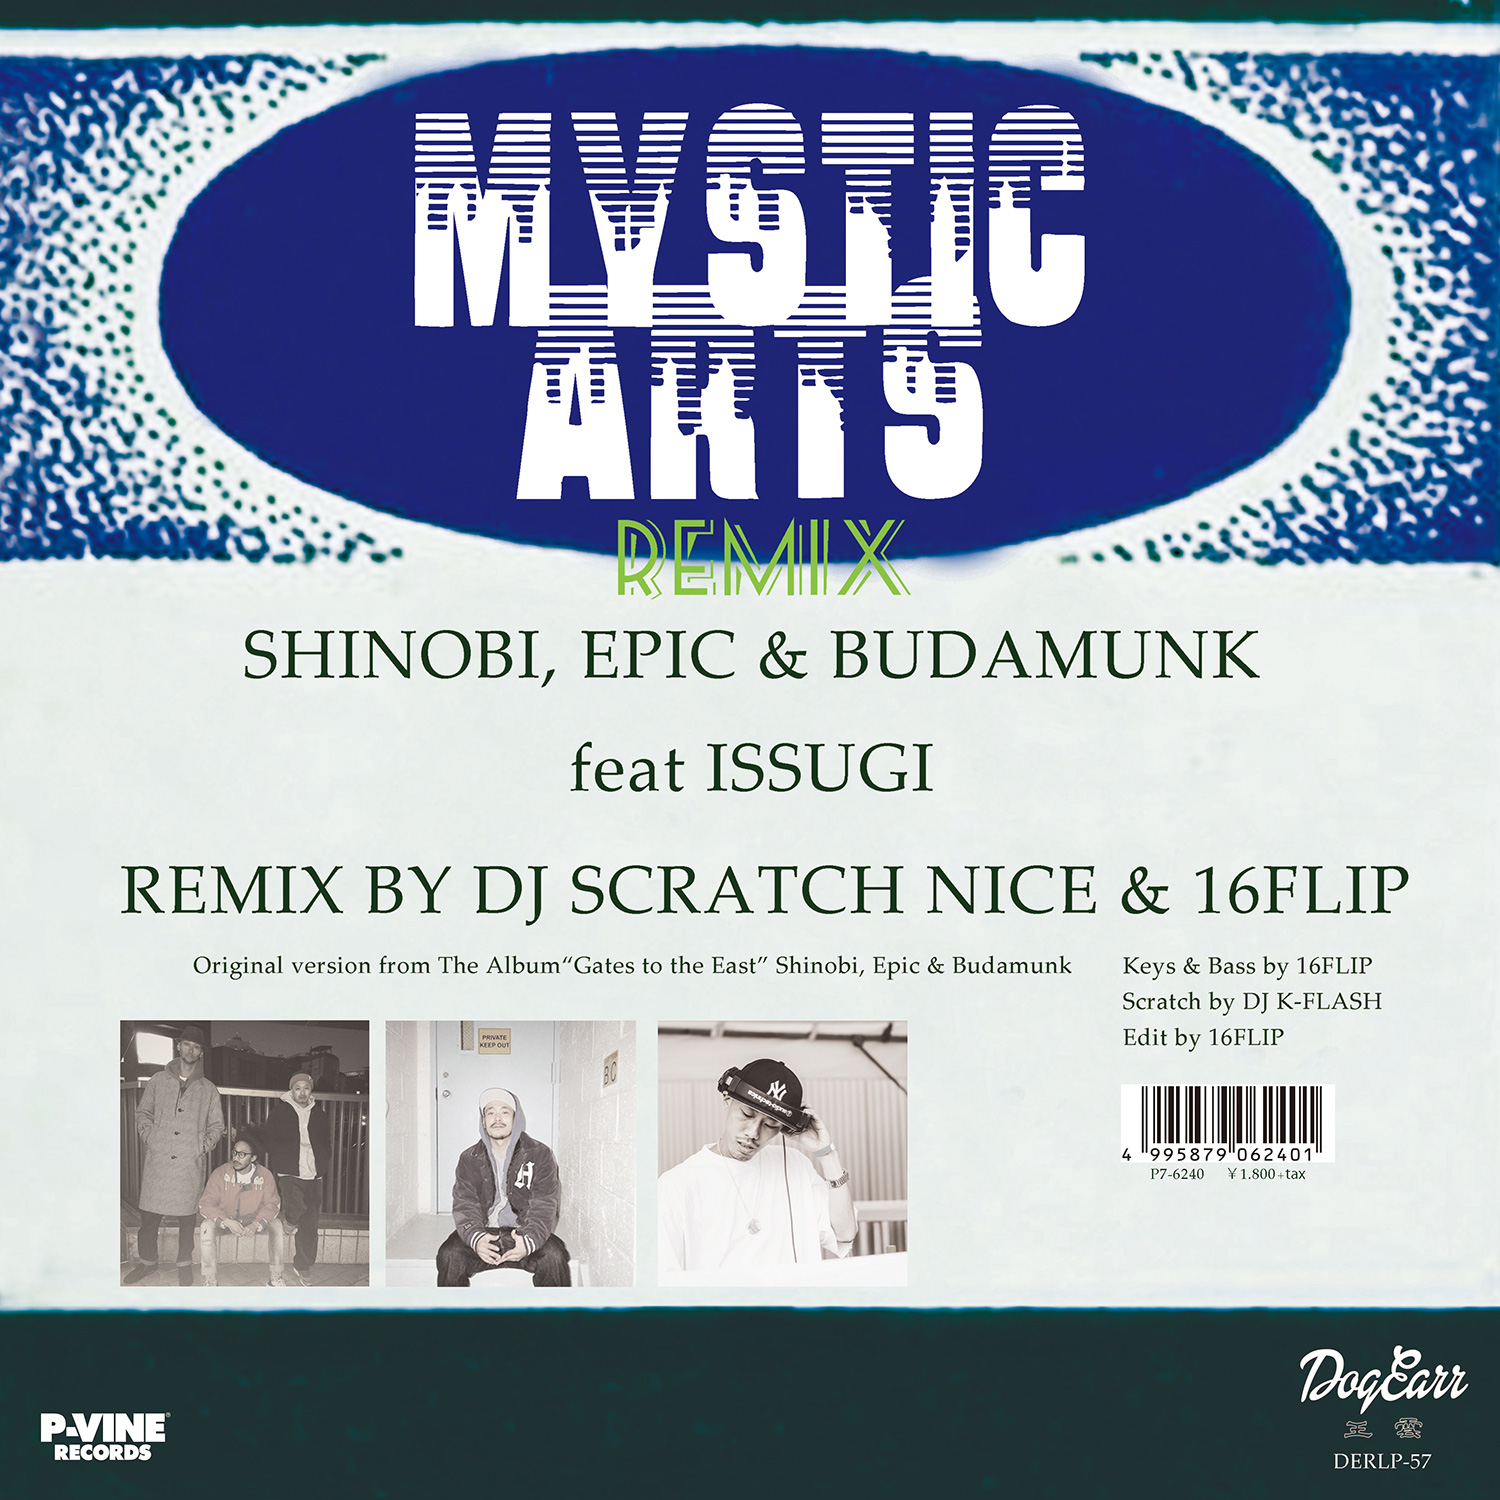 SHINOBI, EPIC & BUDAMUNK 'MYSTIC ARTS (REMIX) feat. ISSUGI' Remixed by DJ SCRATCH NICE & 16FLIP